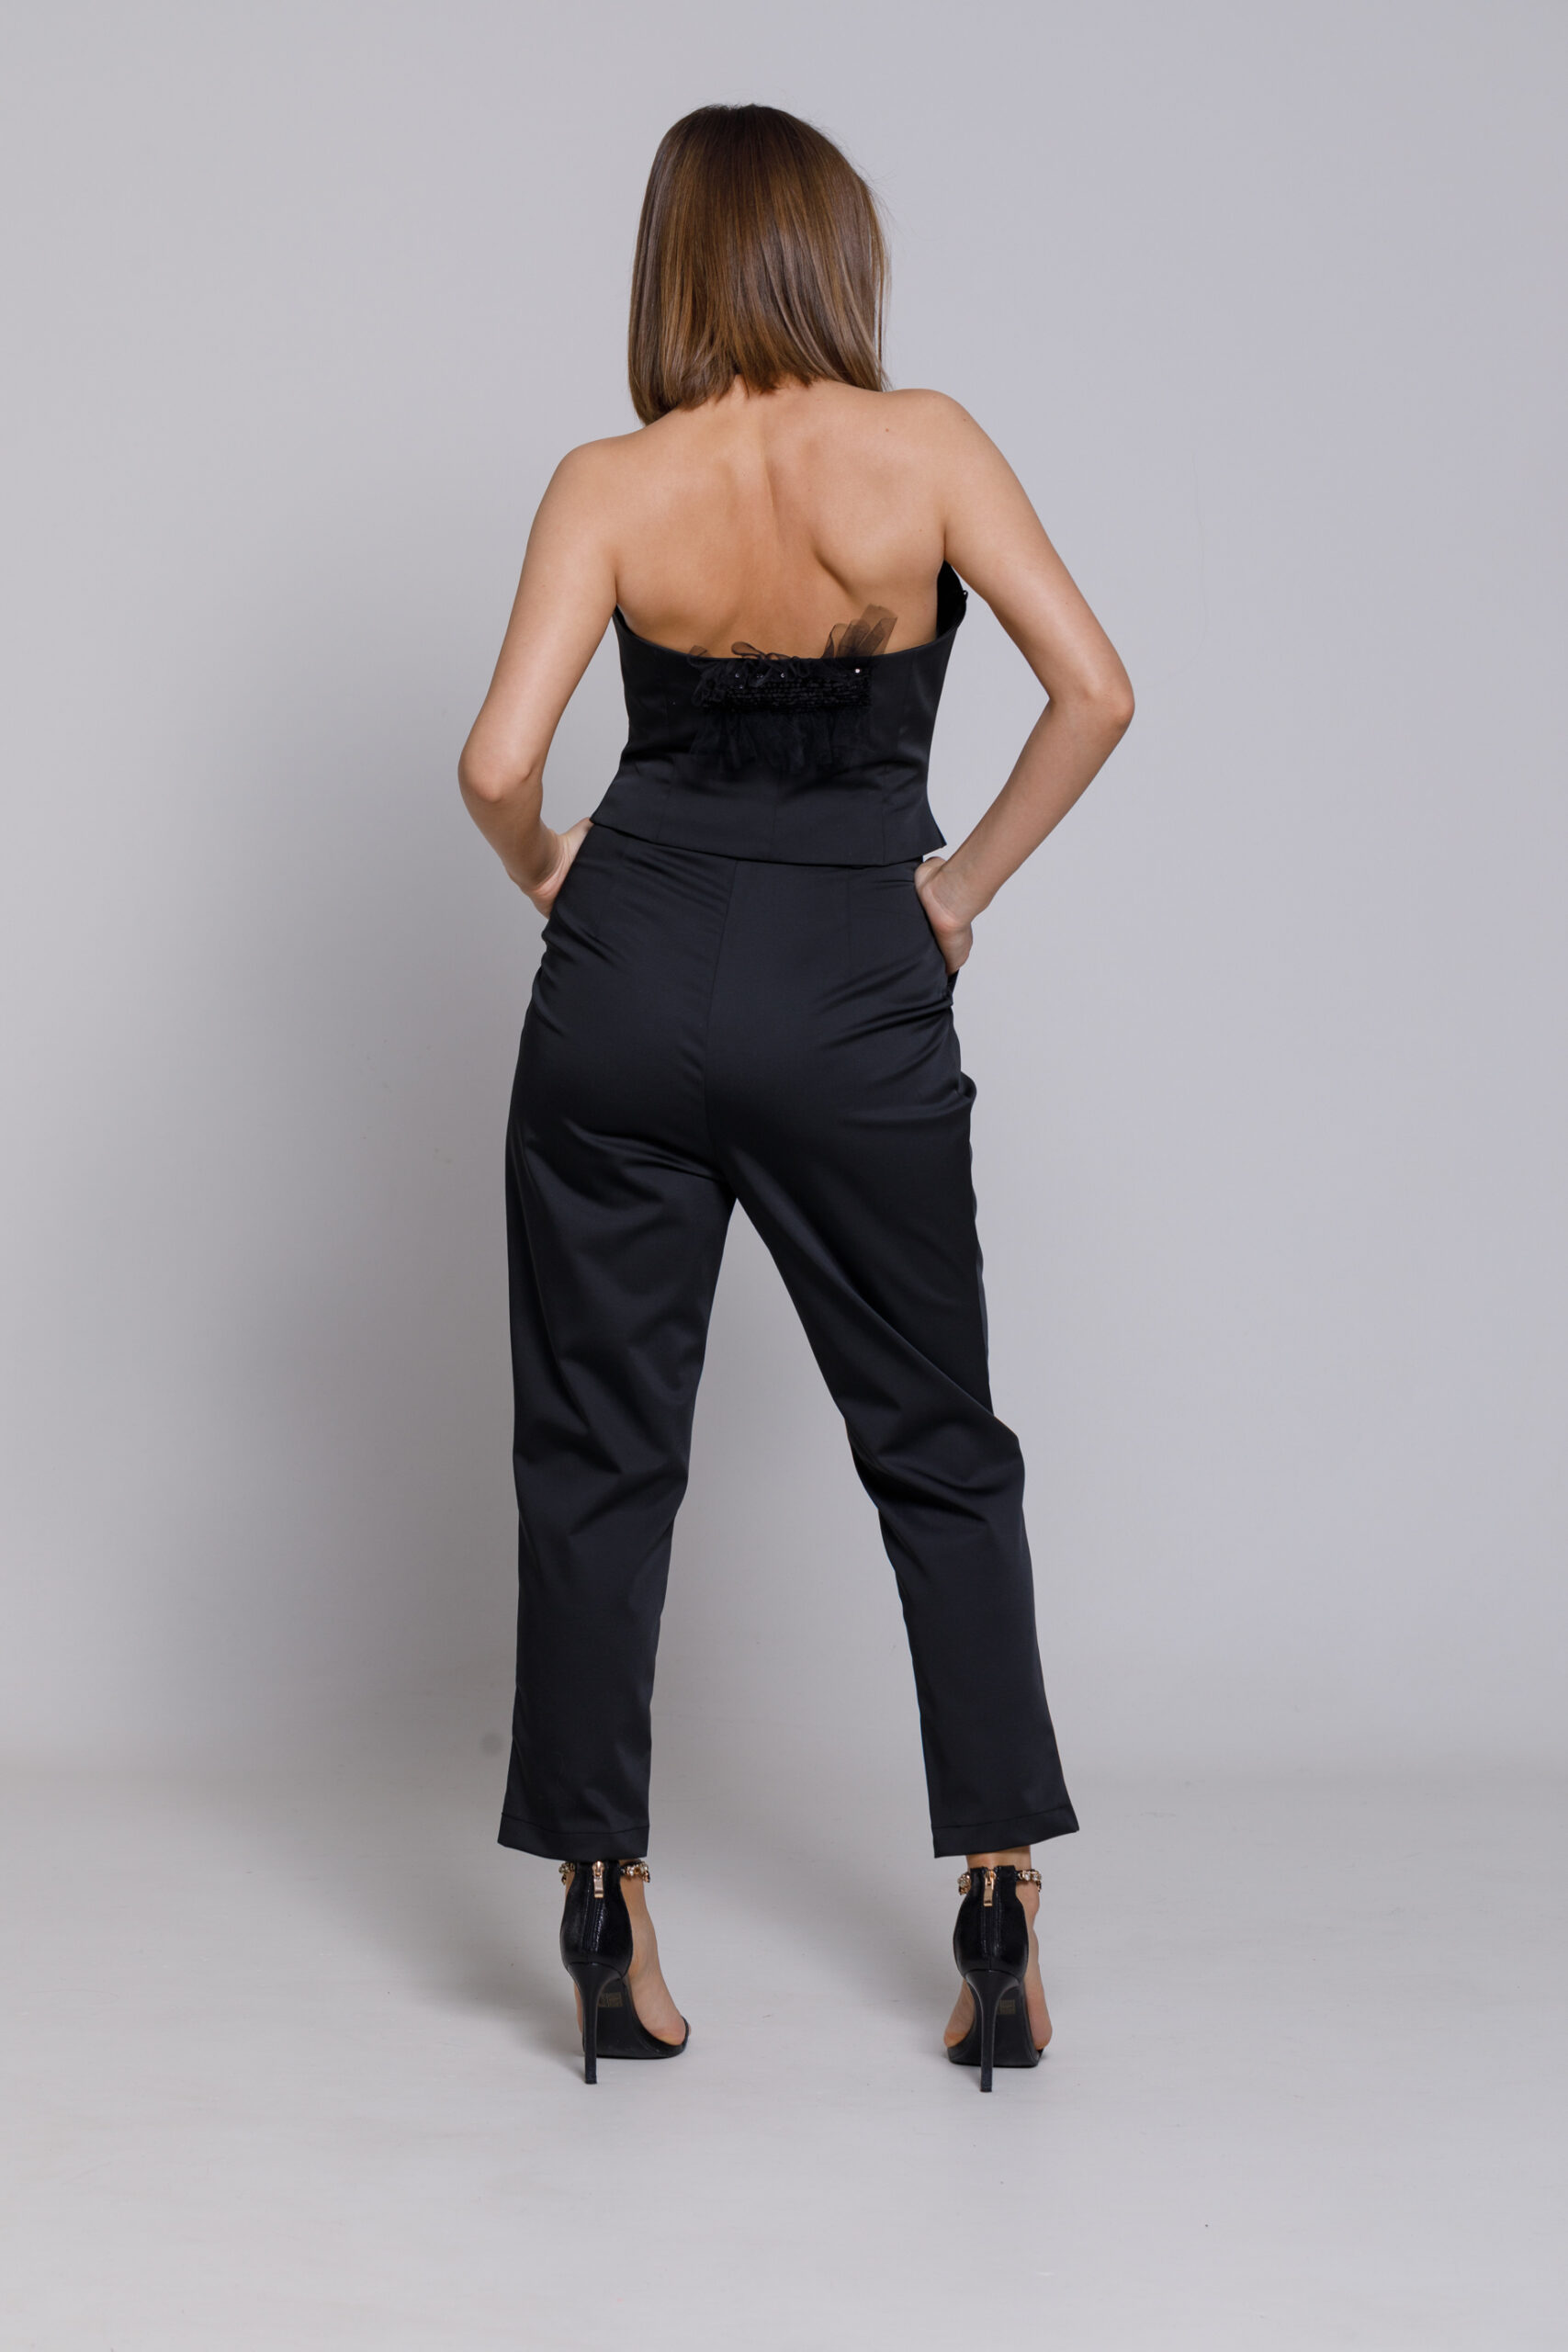 Pantalon CARMEN negru cu curea. Materiale naturale, design unicat, cu broderie si aplicatii handmade